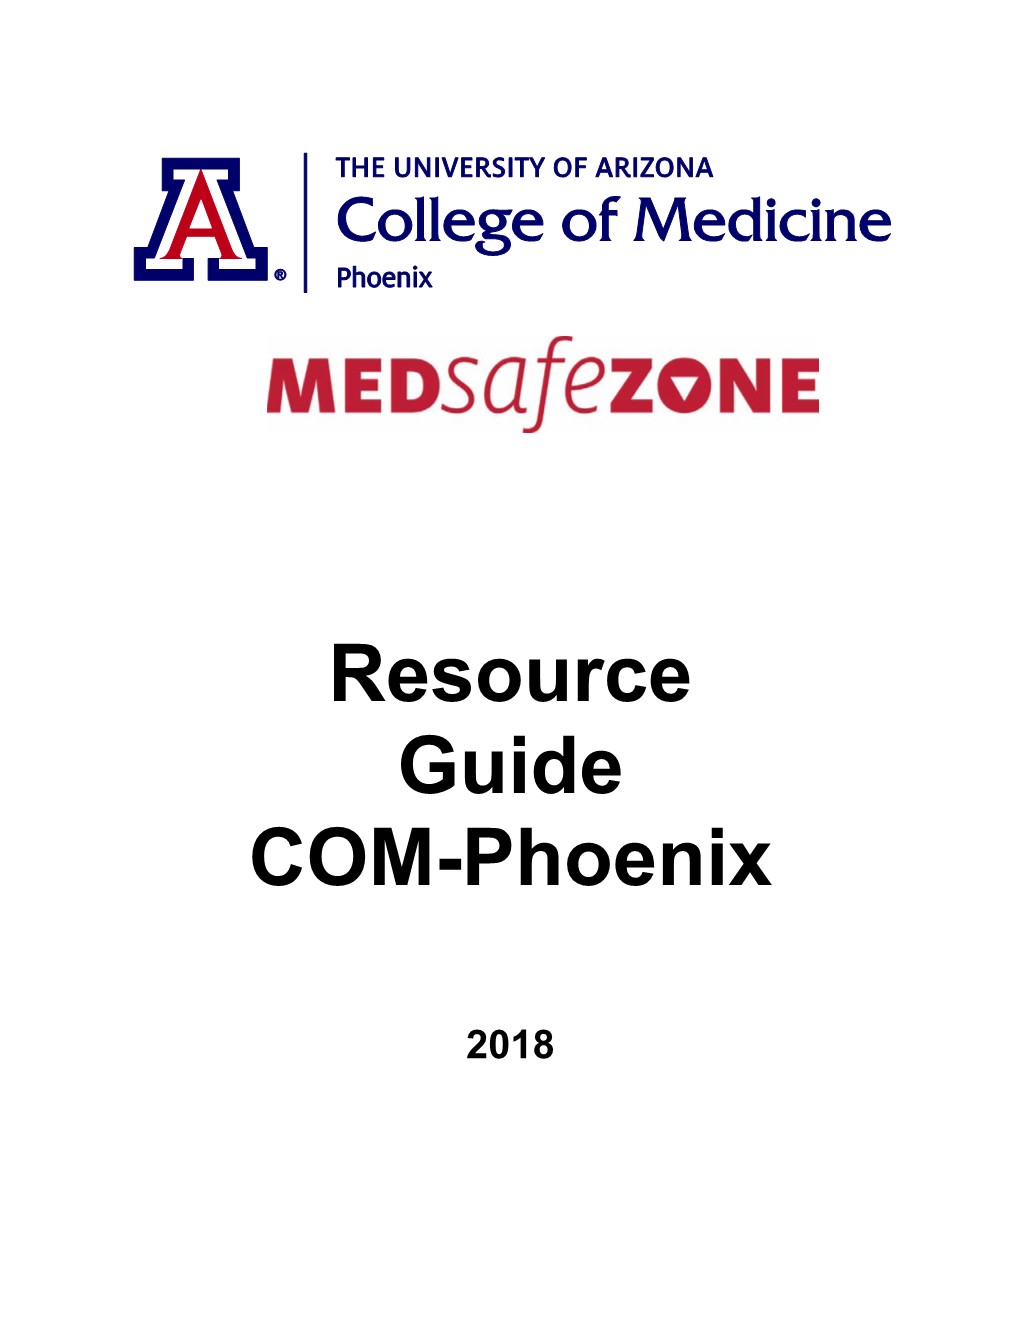 Resource Guide COM-Phoenix